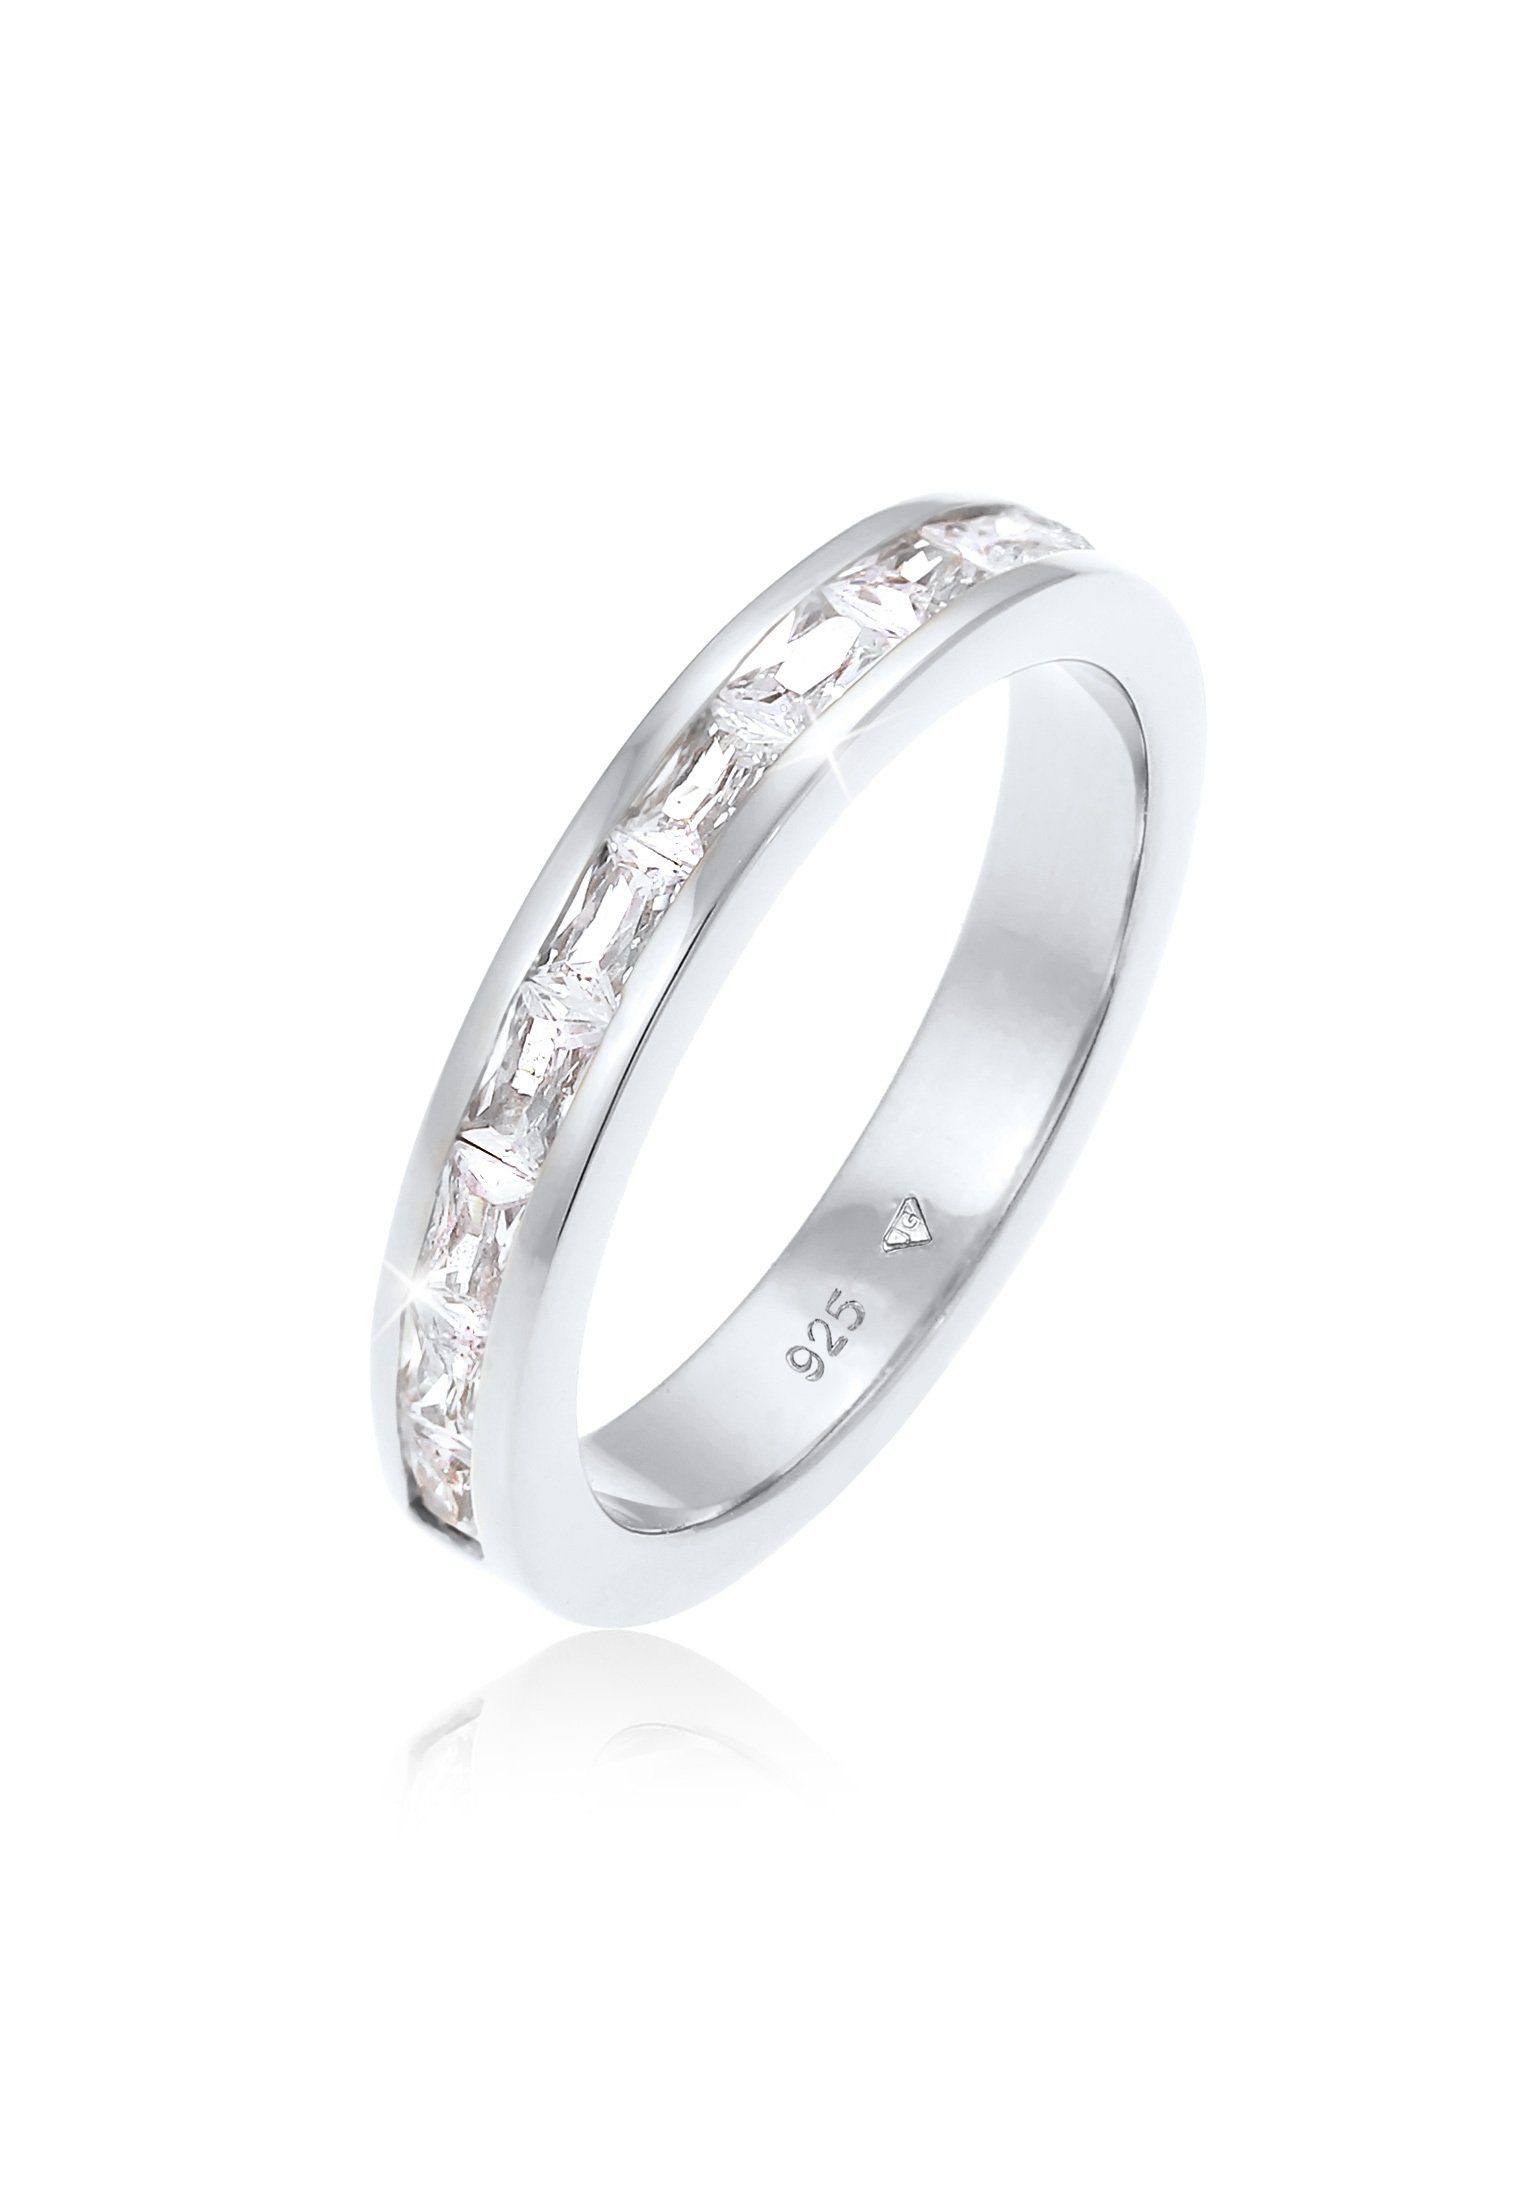 Damen Herren Zirkonia Ring Silber Titan Stahl Fingerring Ehering Verlobungsringe 